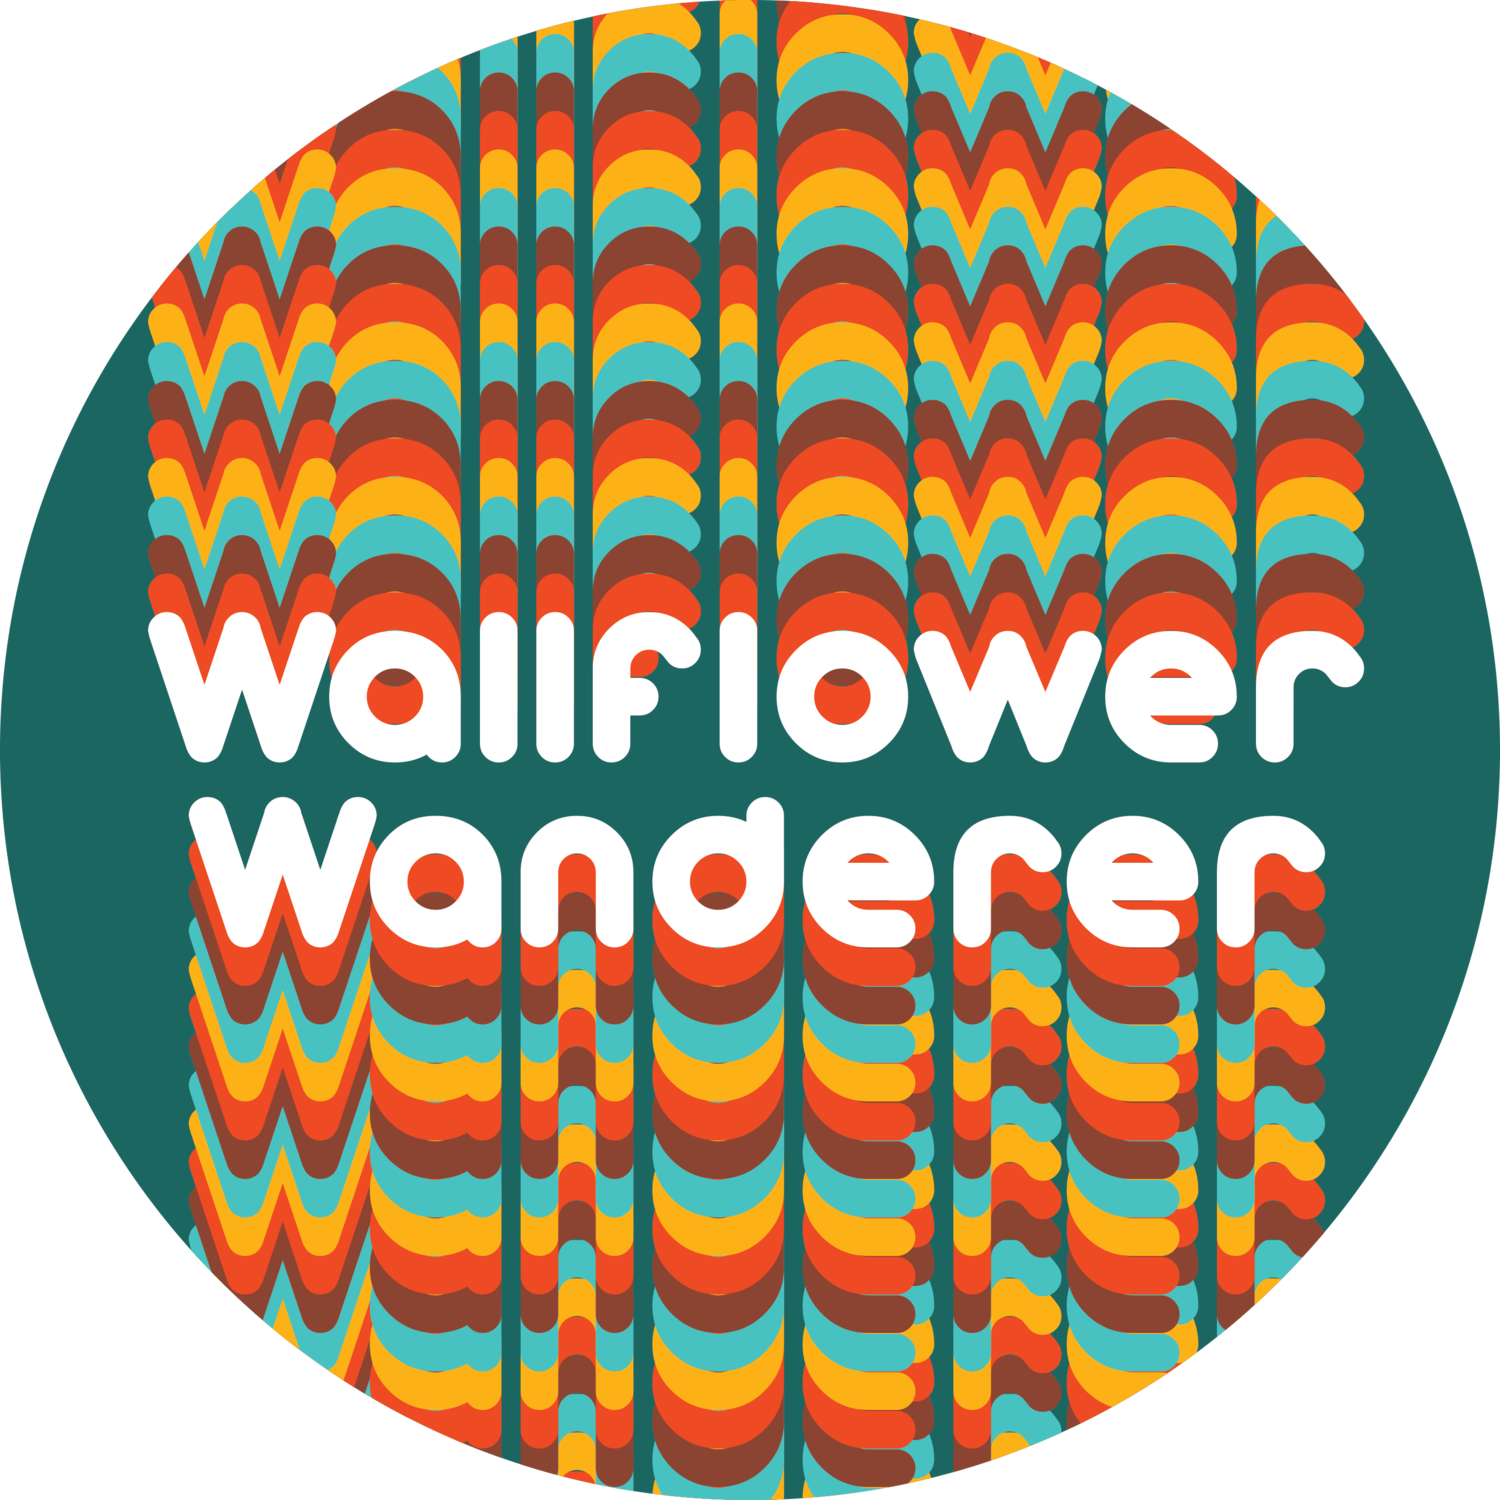 Wallflower Wanderer